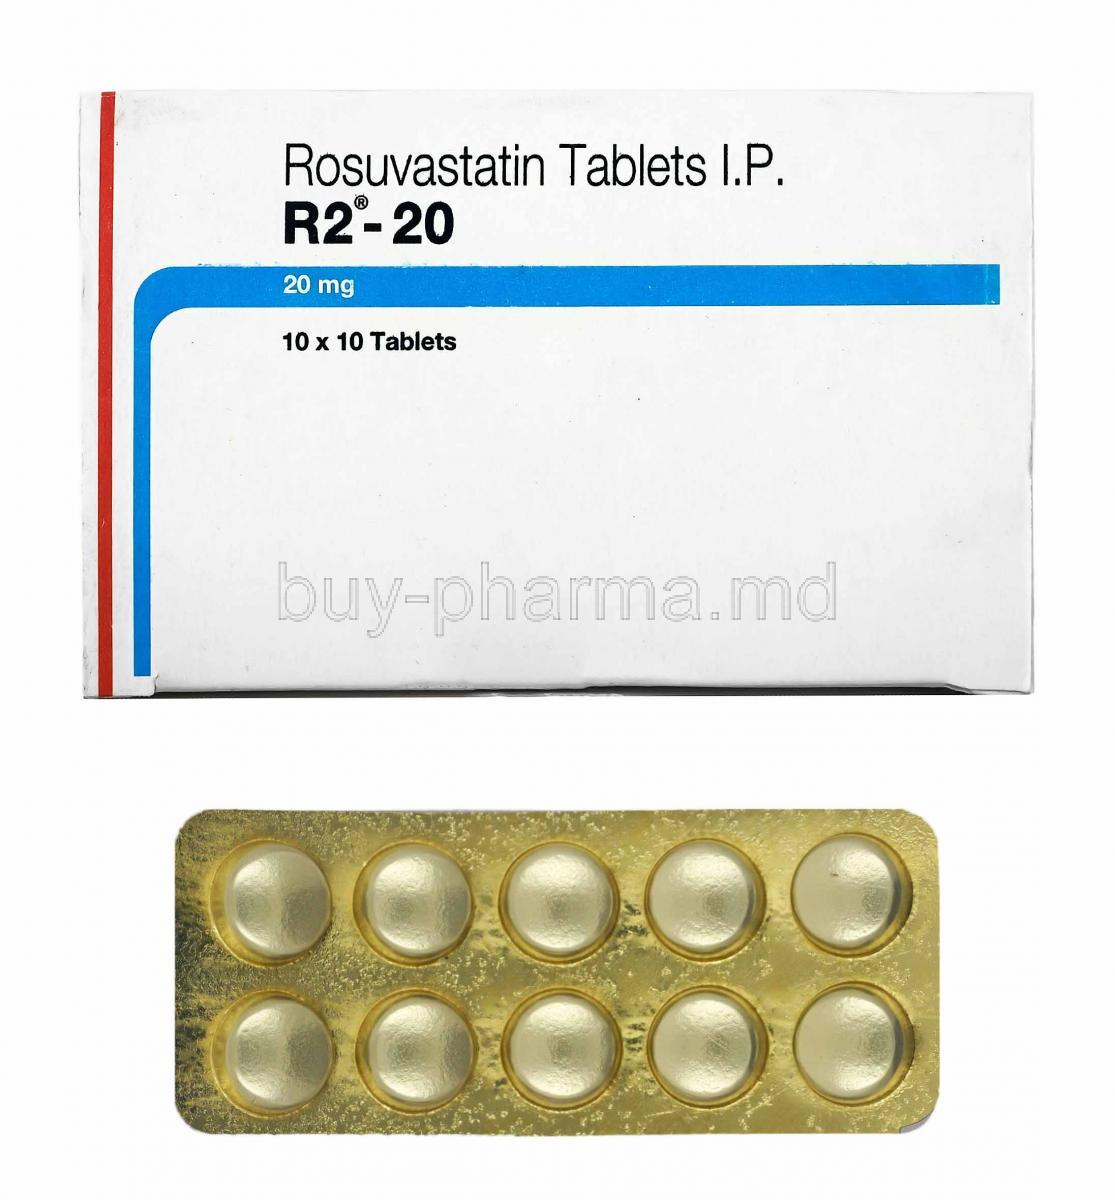 R2, Rosuvastatin 20mg box and tablets